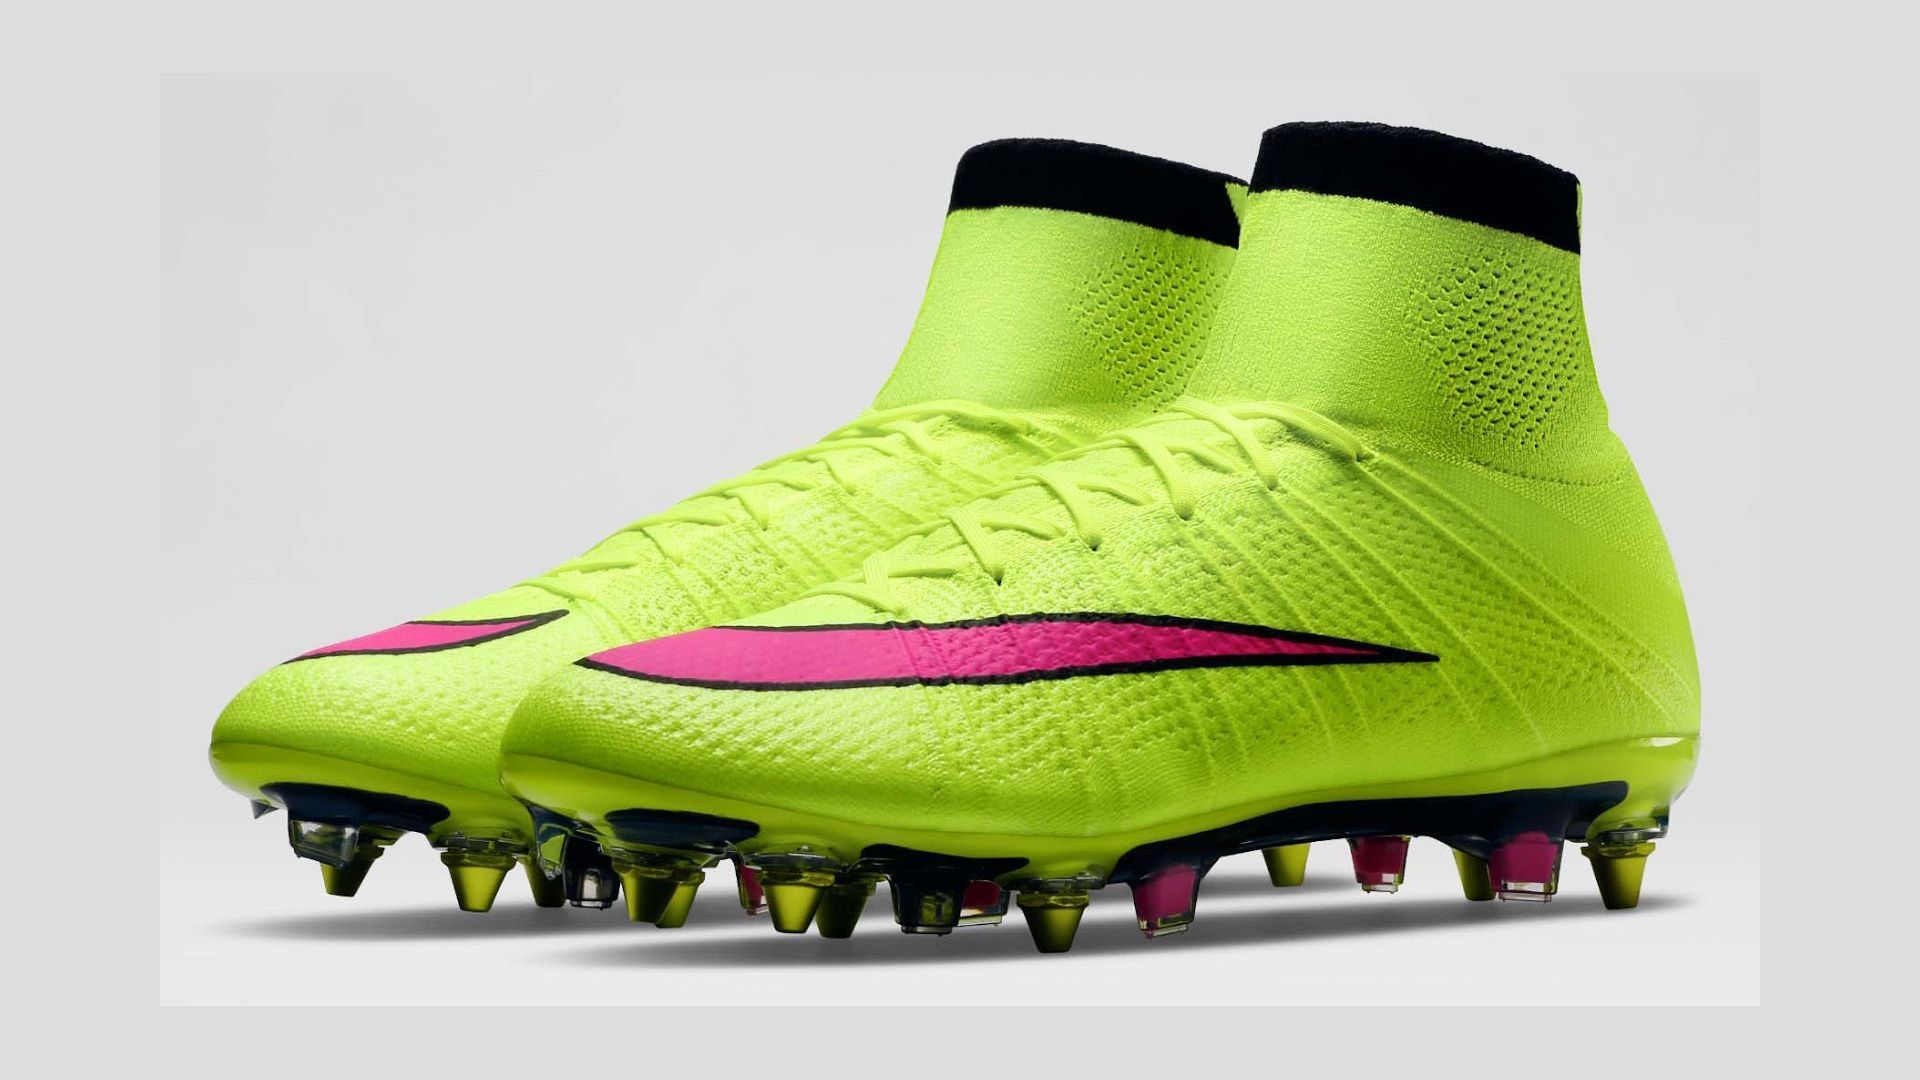 [19+] Nike Soccer Boots Adidas Wallpapers | WallpaperSafari